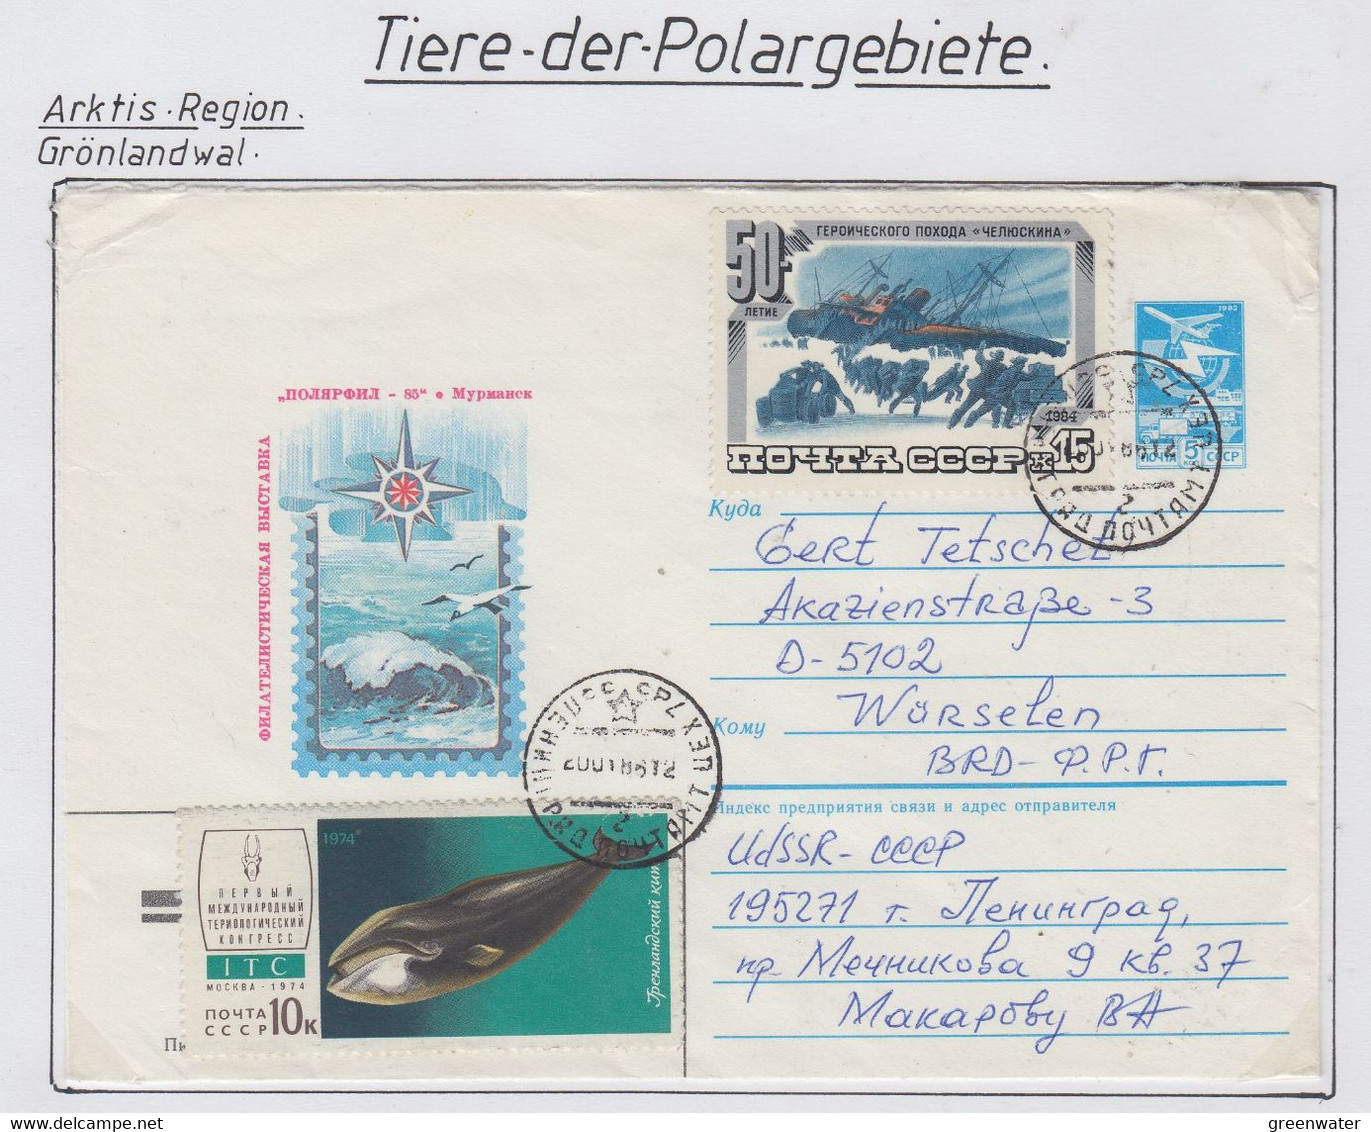 Russia 1986 Cover "Grönlandwal" (AN154) - Arctic Tierwelt